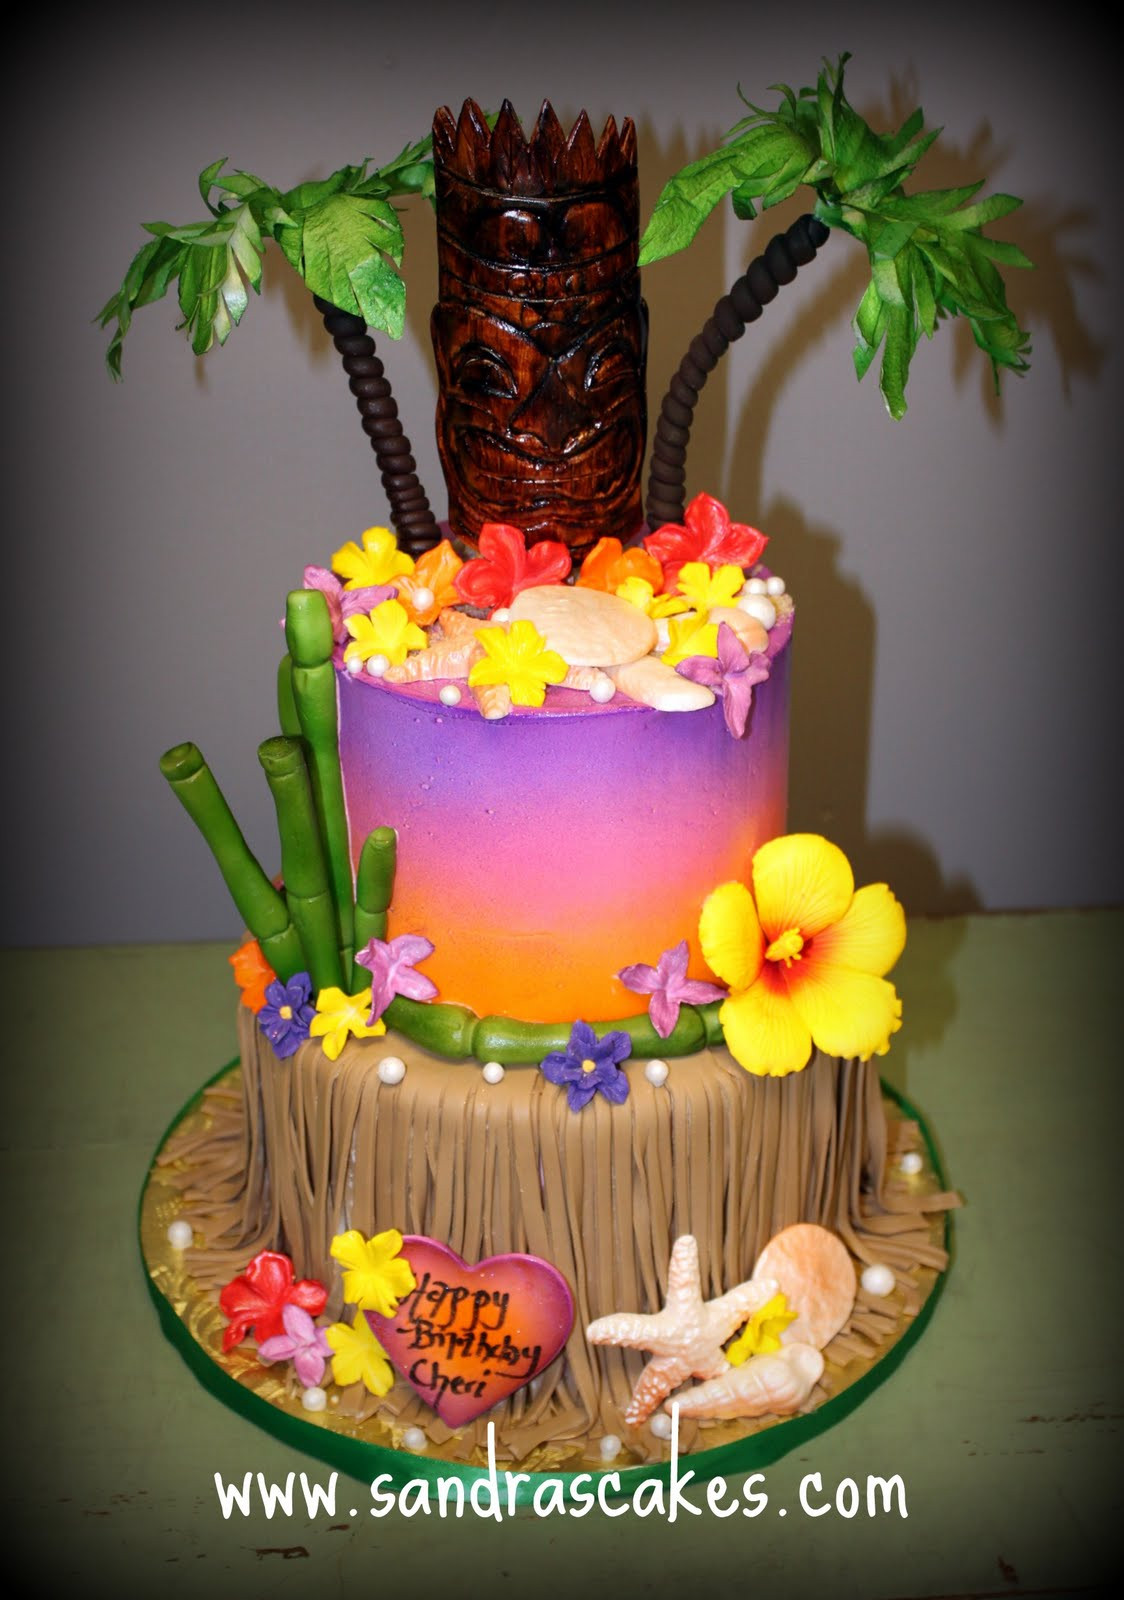 Best ideas about Hawaiian Birthday Cake
. Save or Pin Luau Birthday Cake Now.